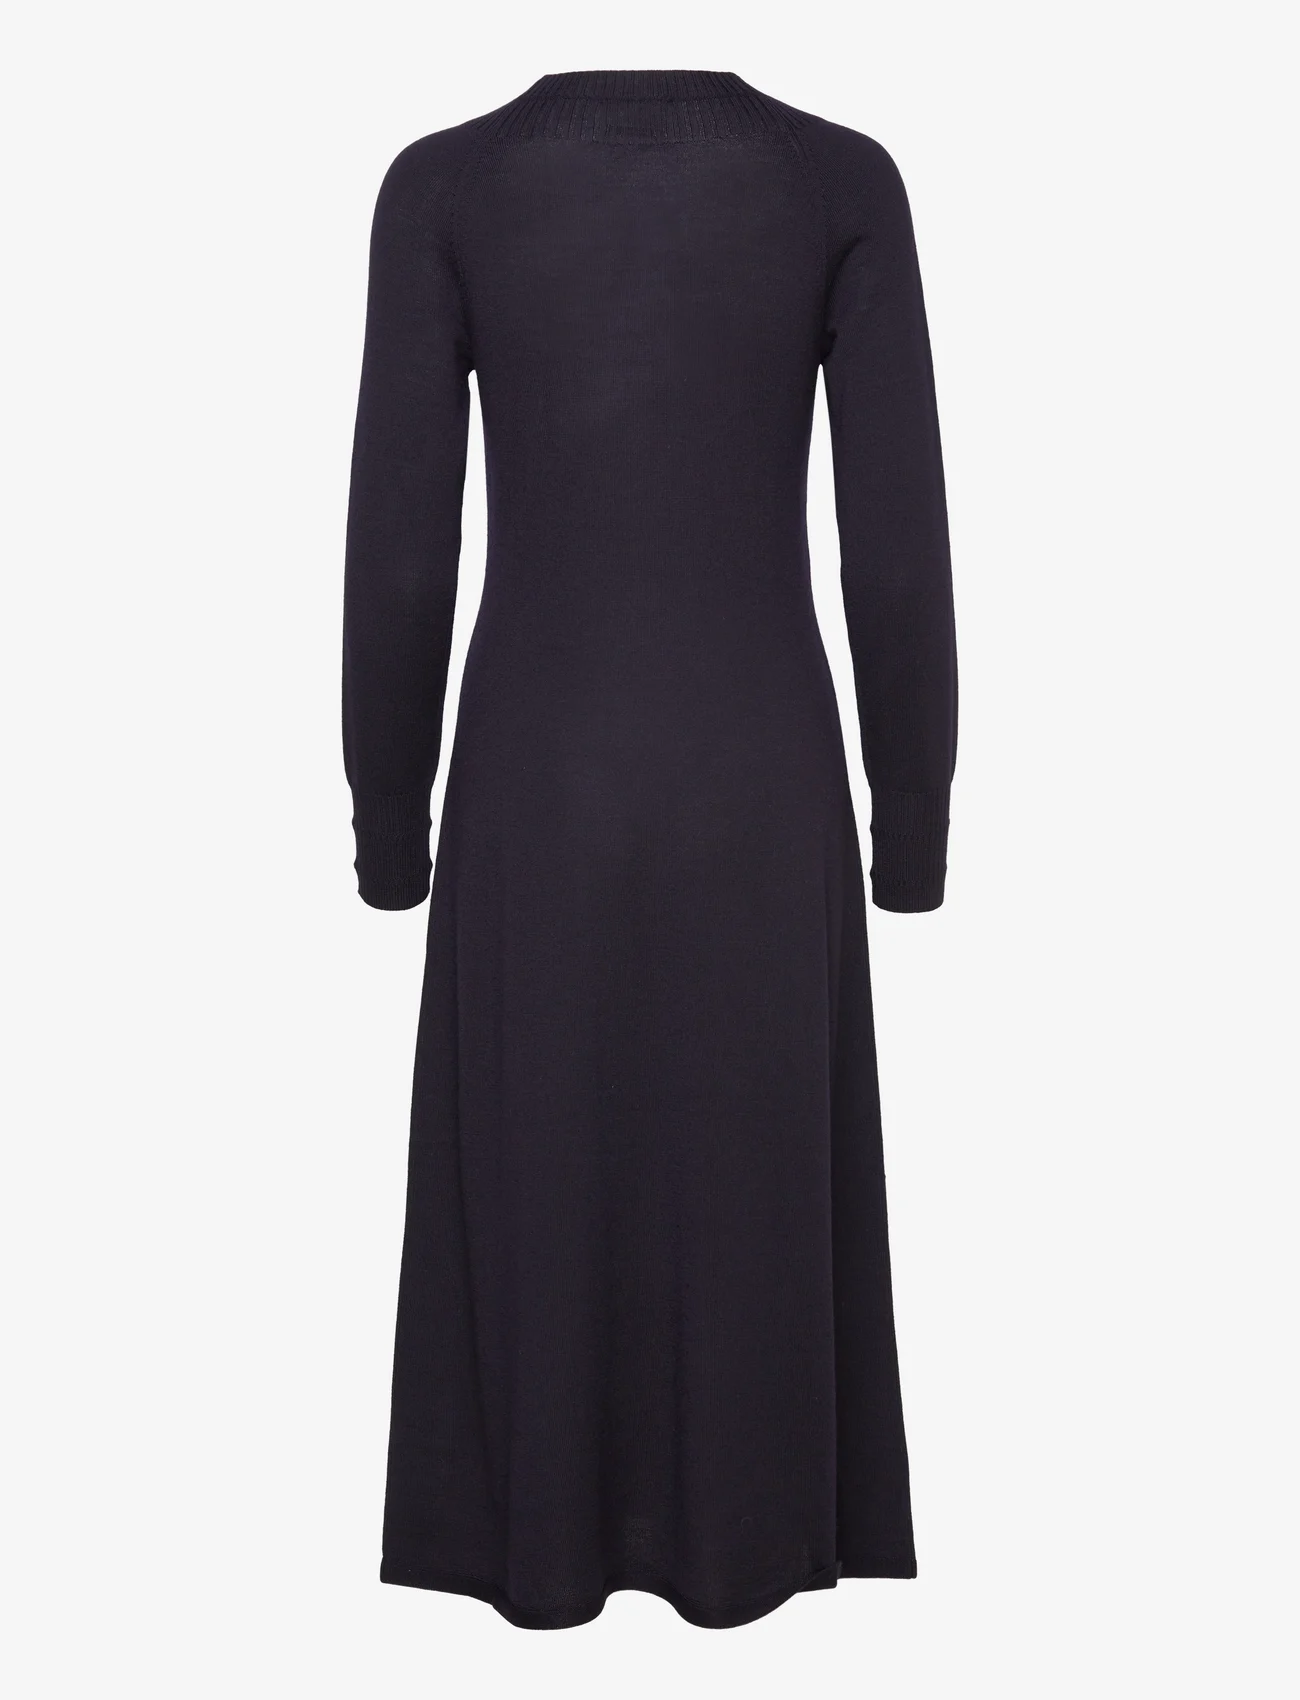 Andiata - Oberon dress - sukienki dzianinowe - deep navy blue - 1